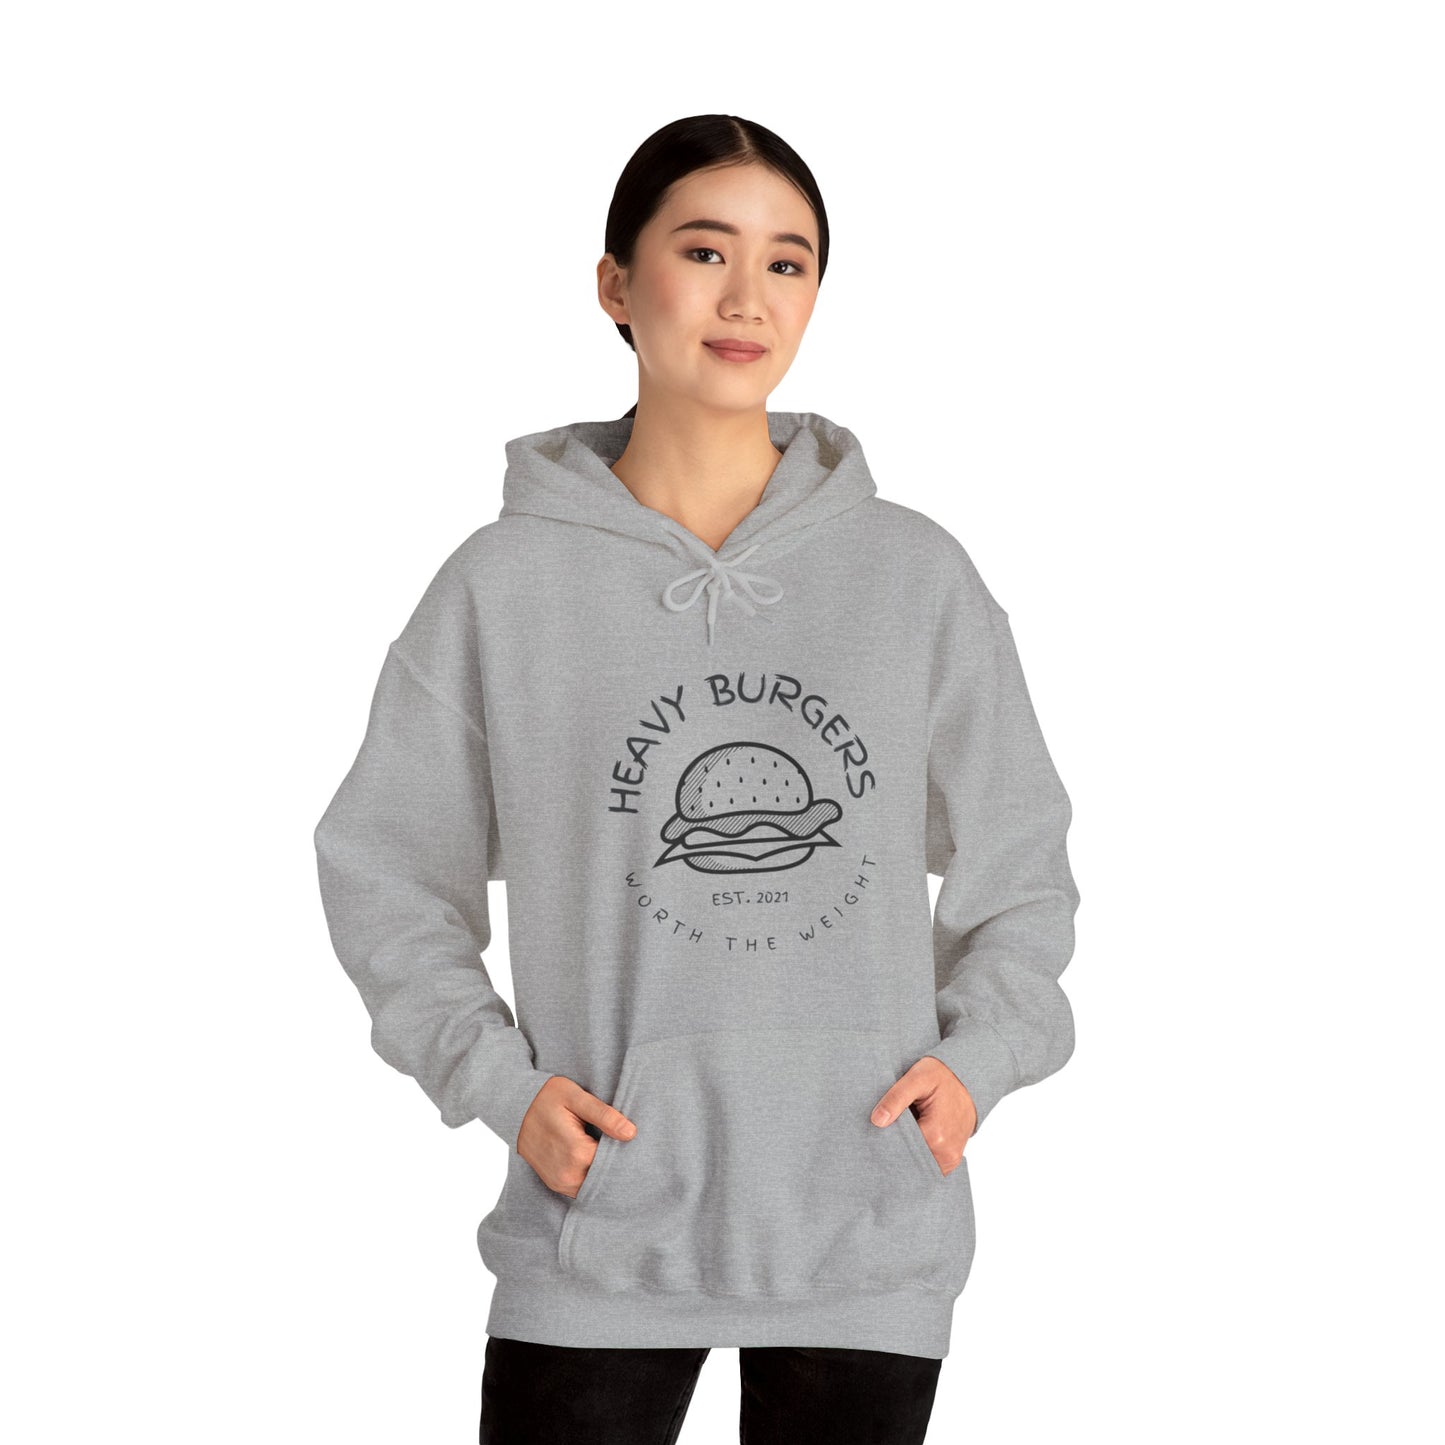 Heavy Burgers Hooded Sweatshirt